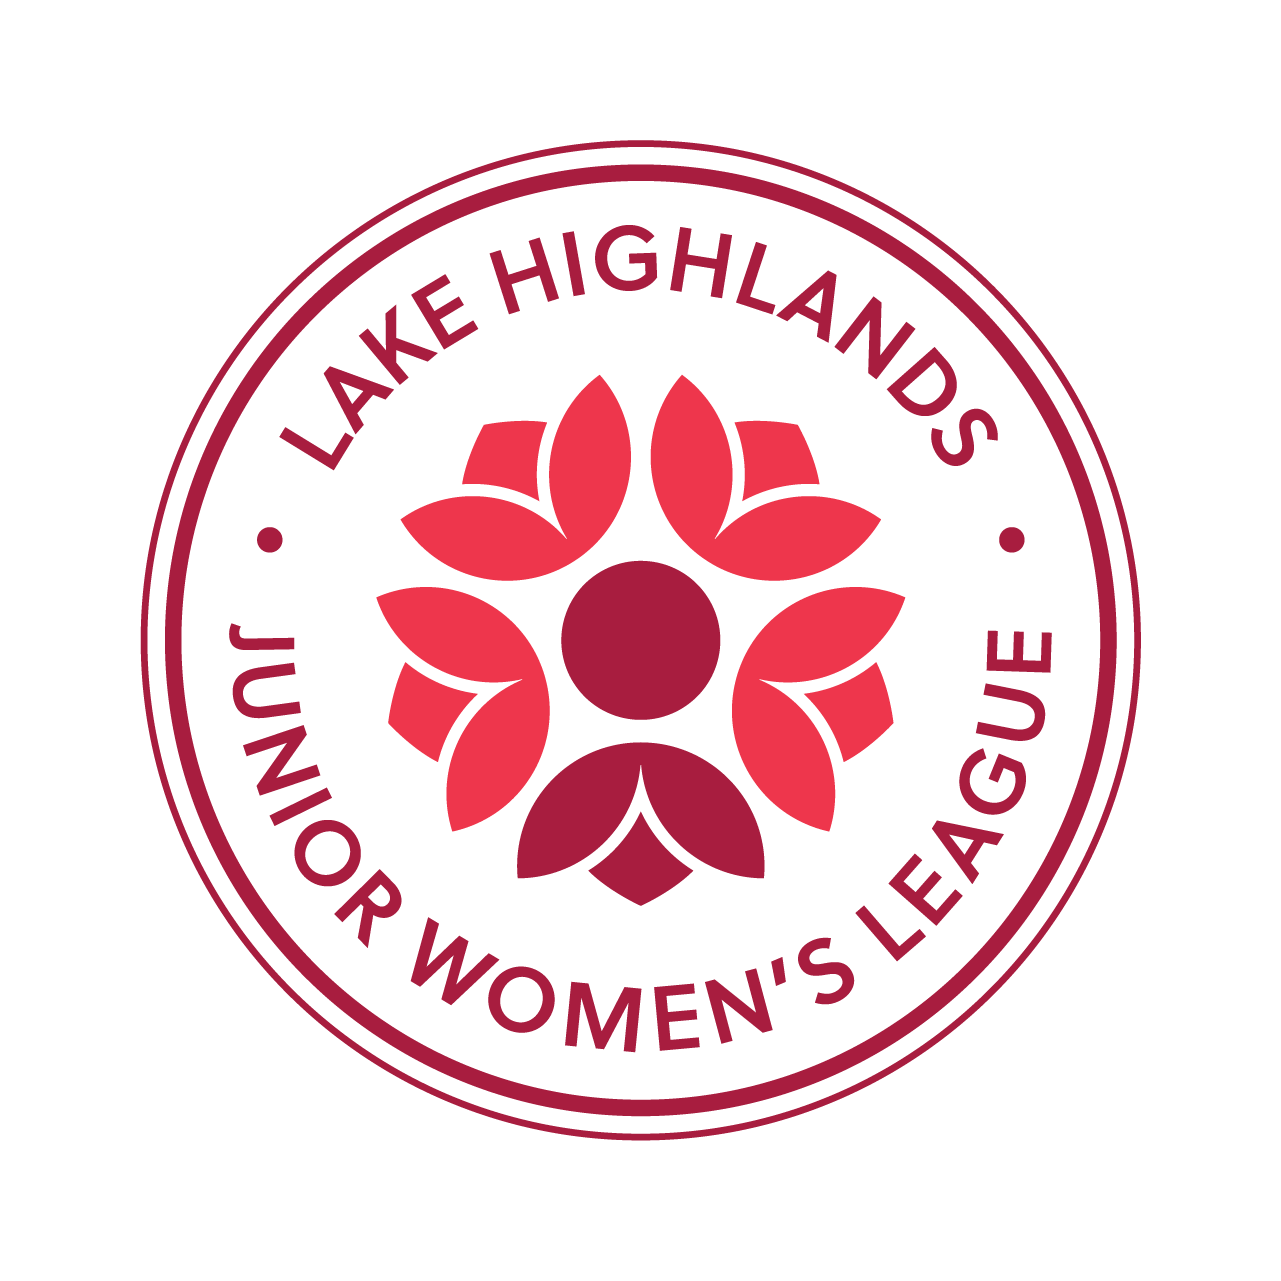 Lake Highlands Junior Women's League